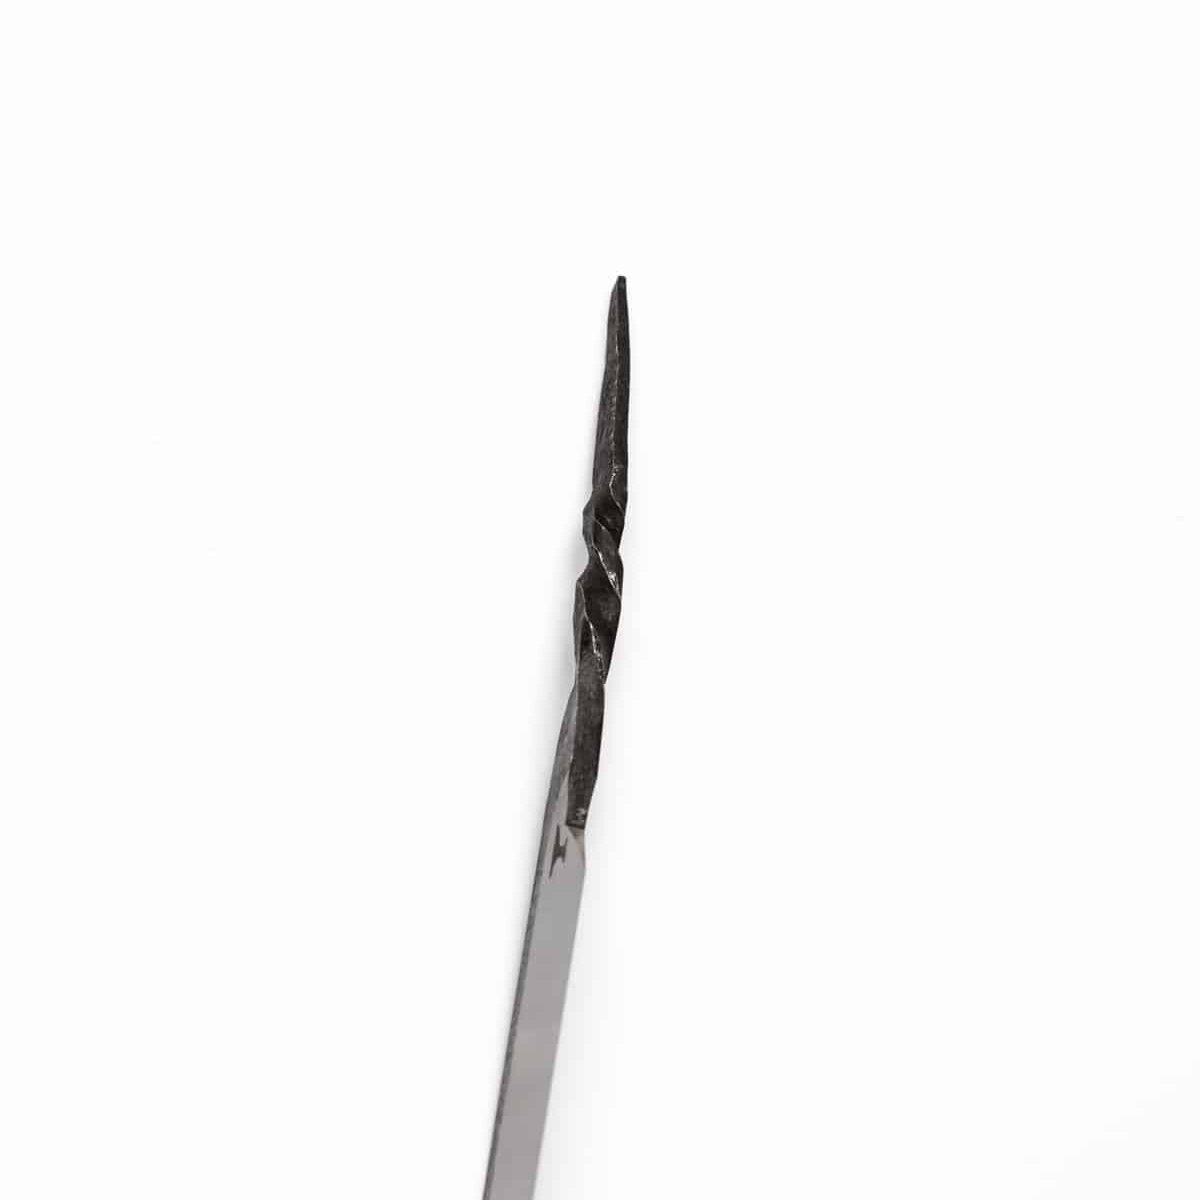 A hand forged custom kamisori razor with twisted handle.